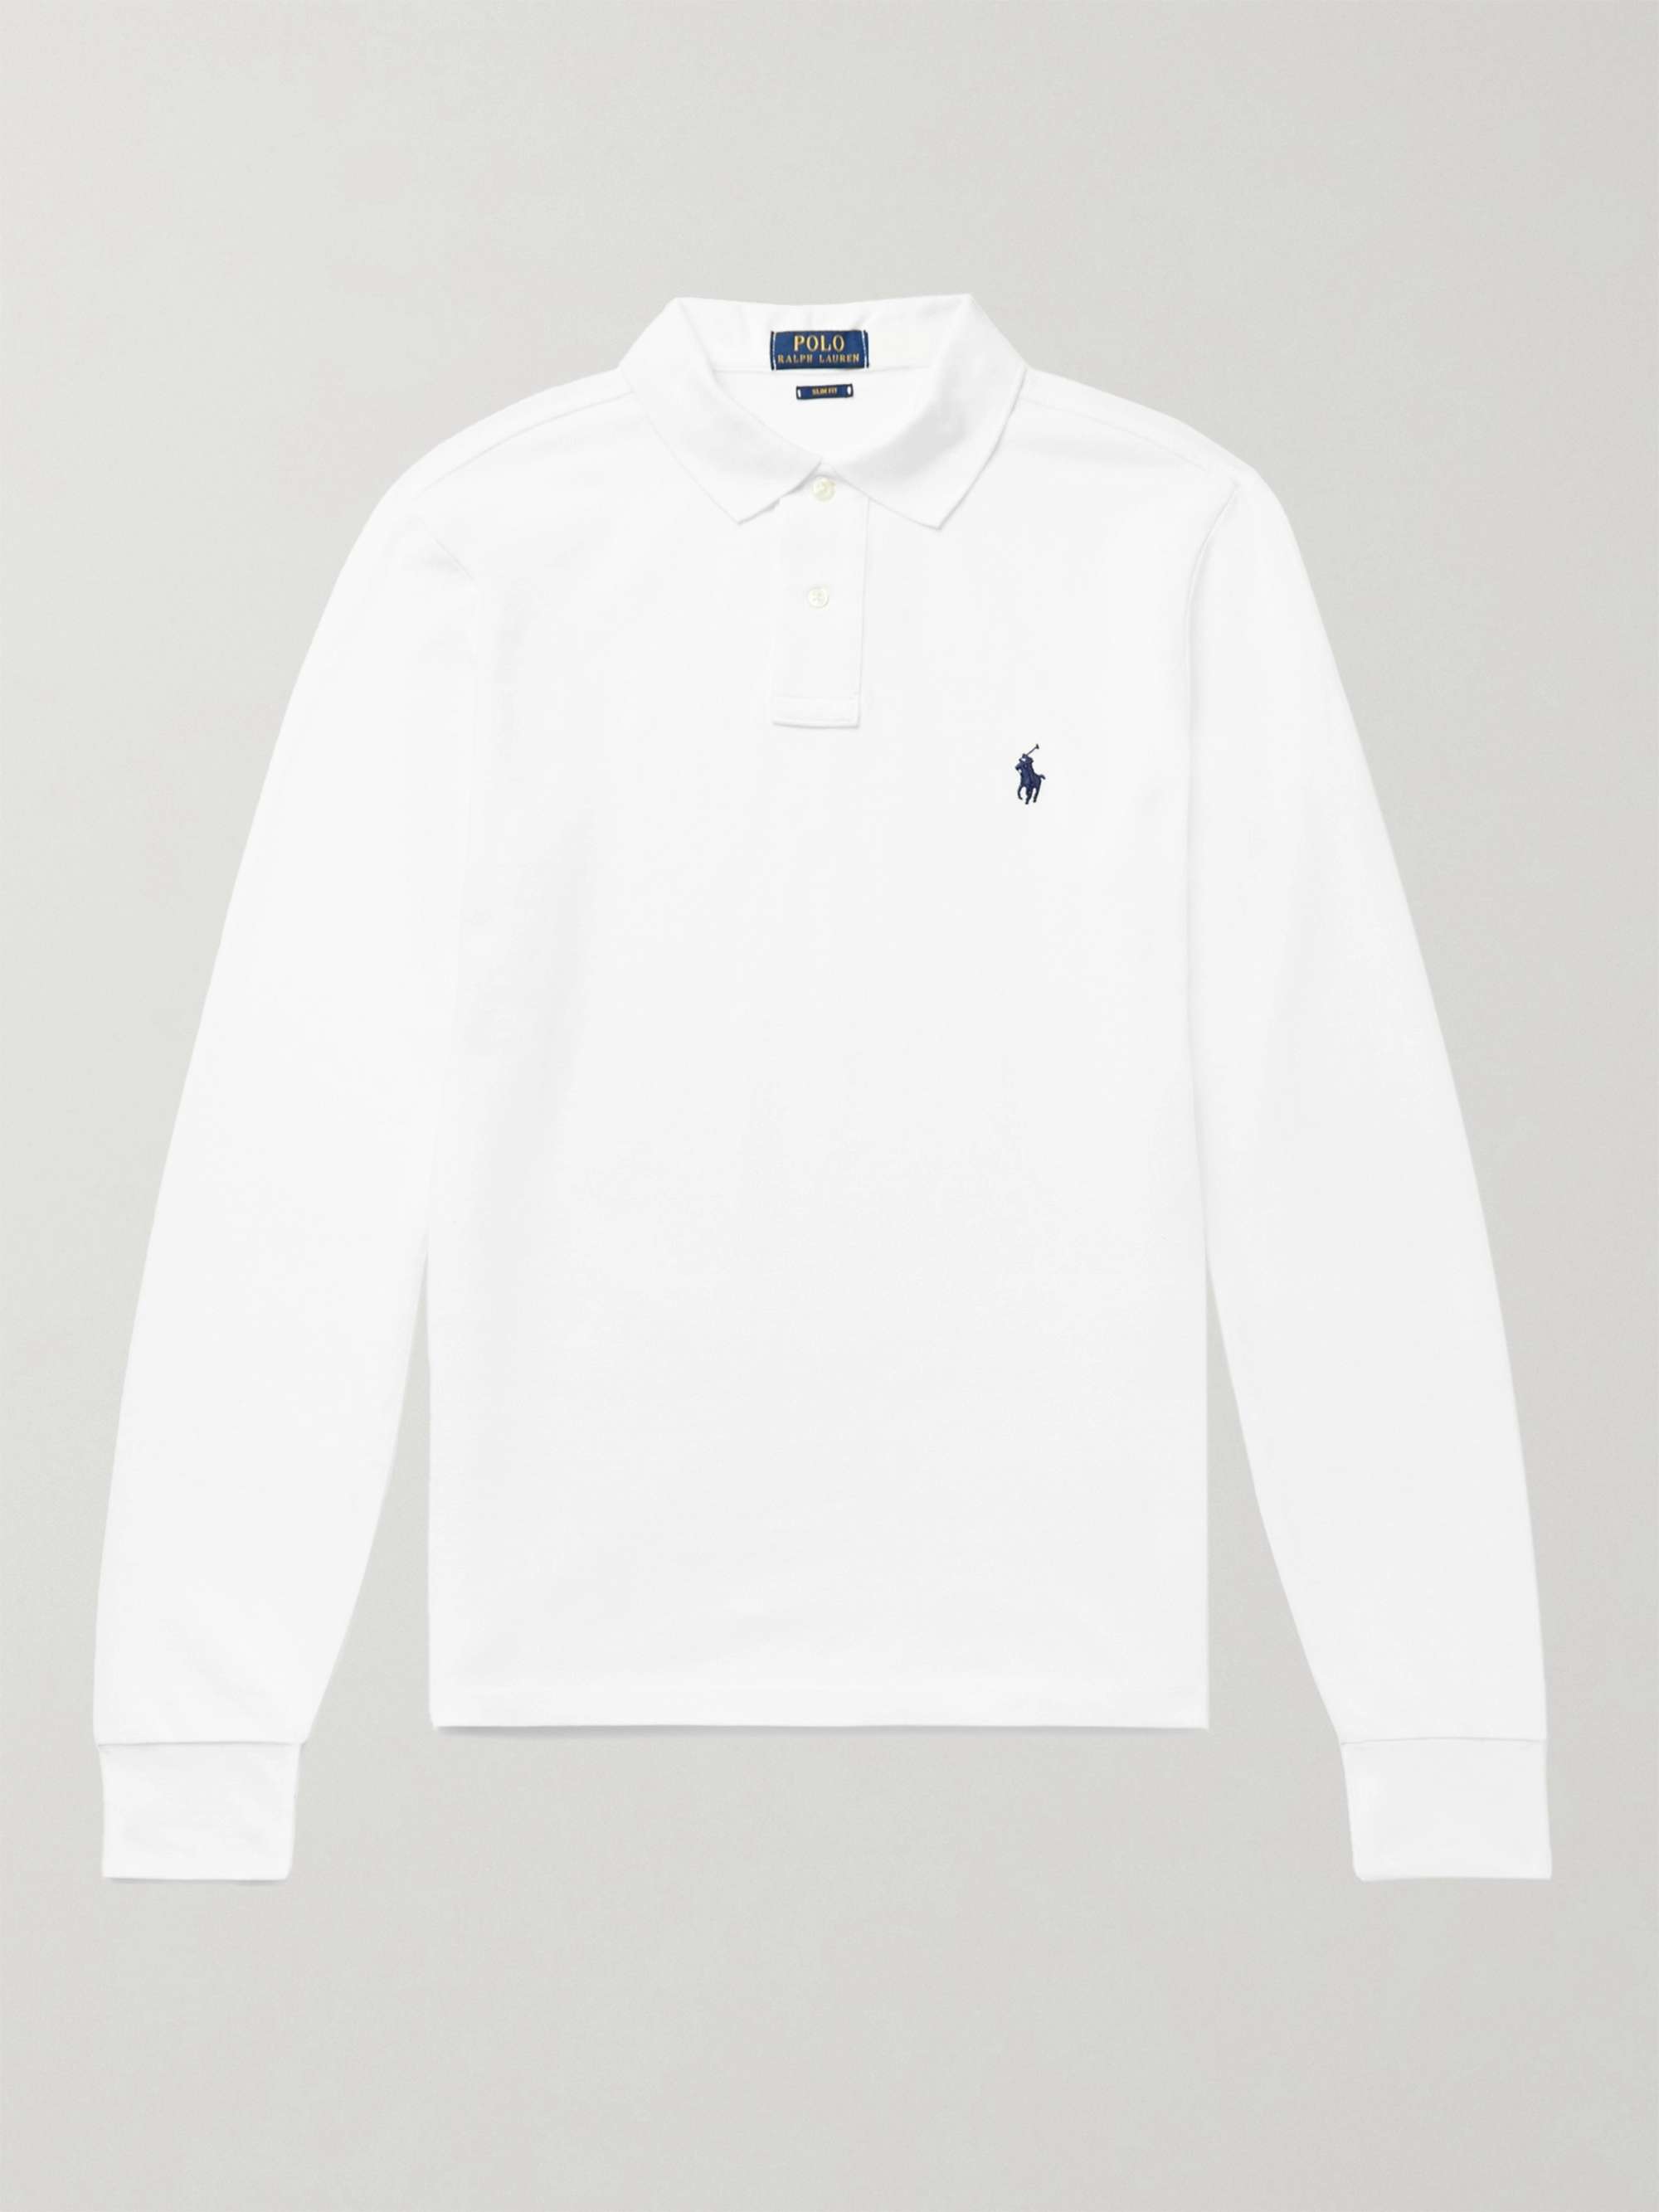 Polo RALPH LAUREN Slim-Fit Cotton-Pique Polo Shirt,White